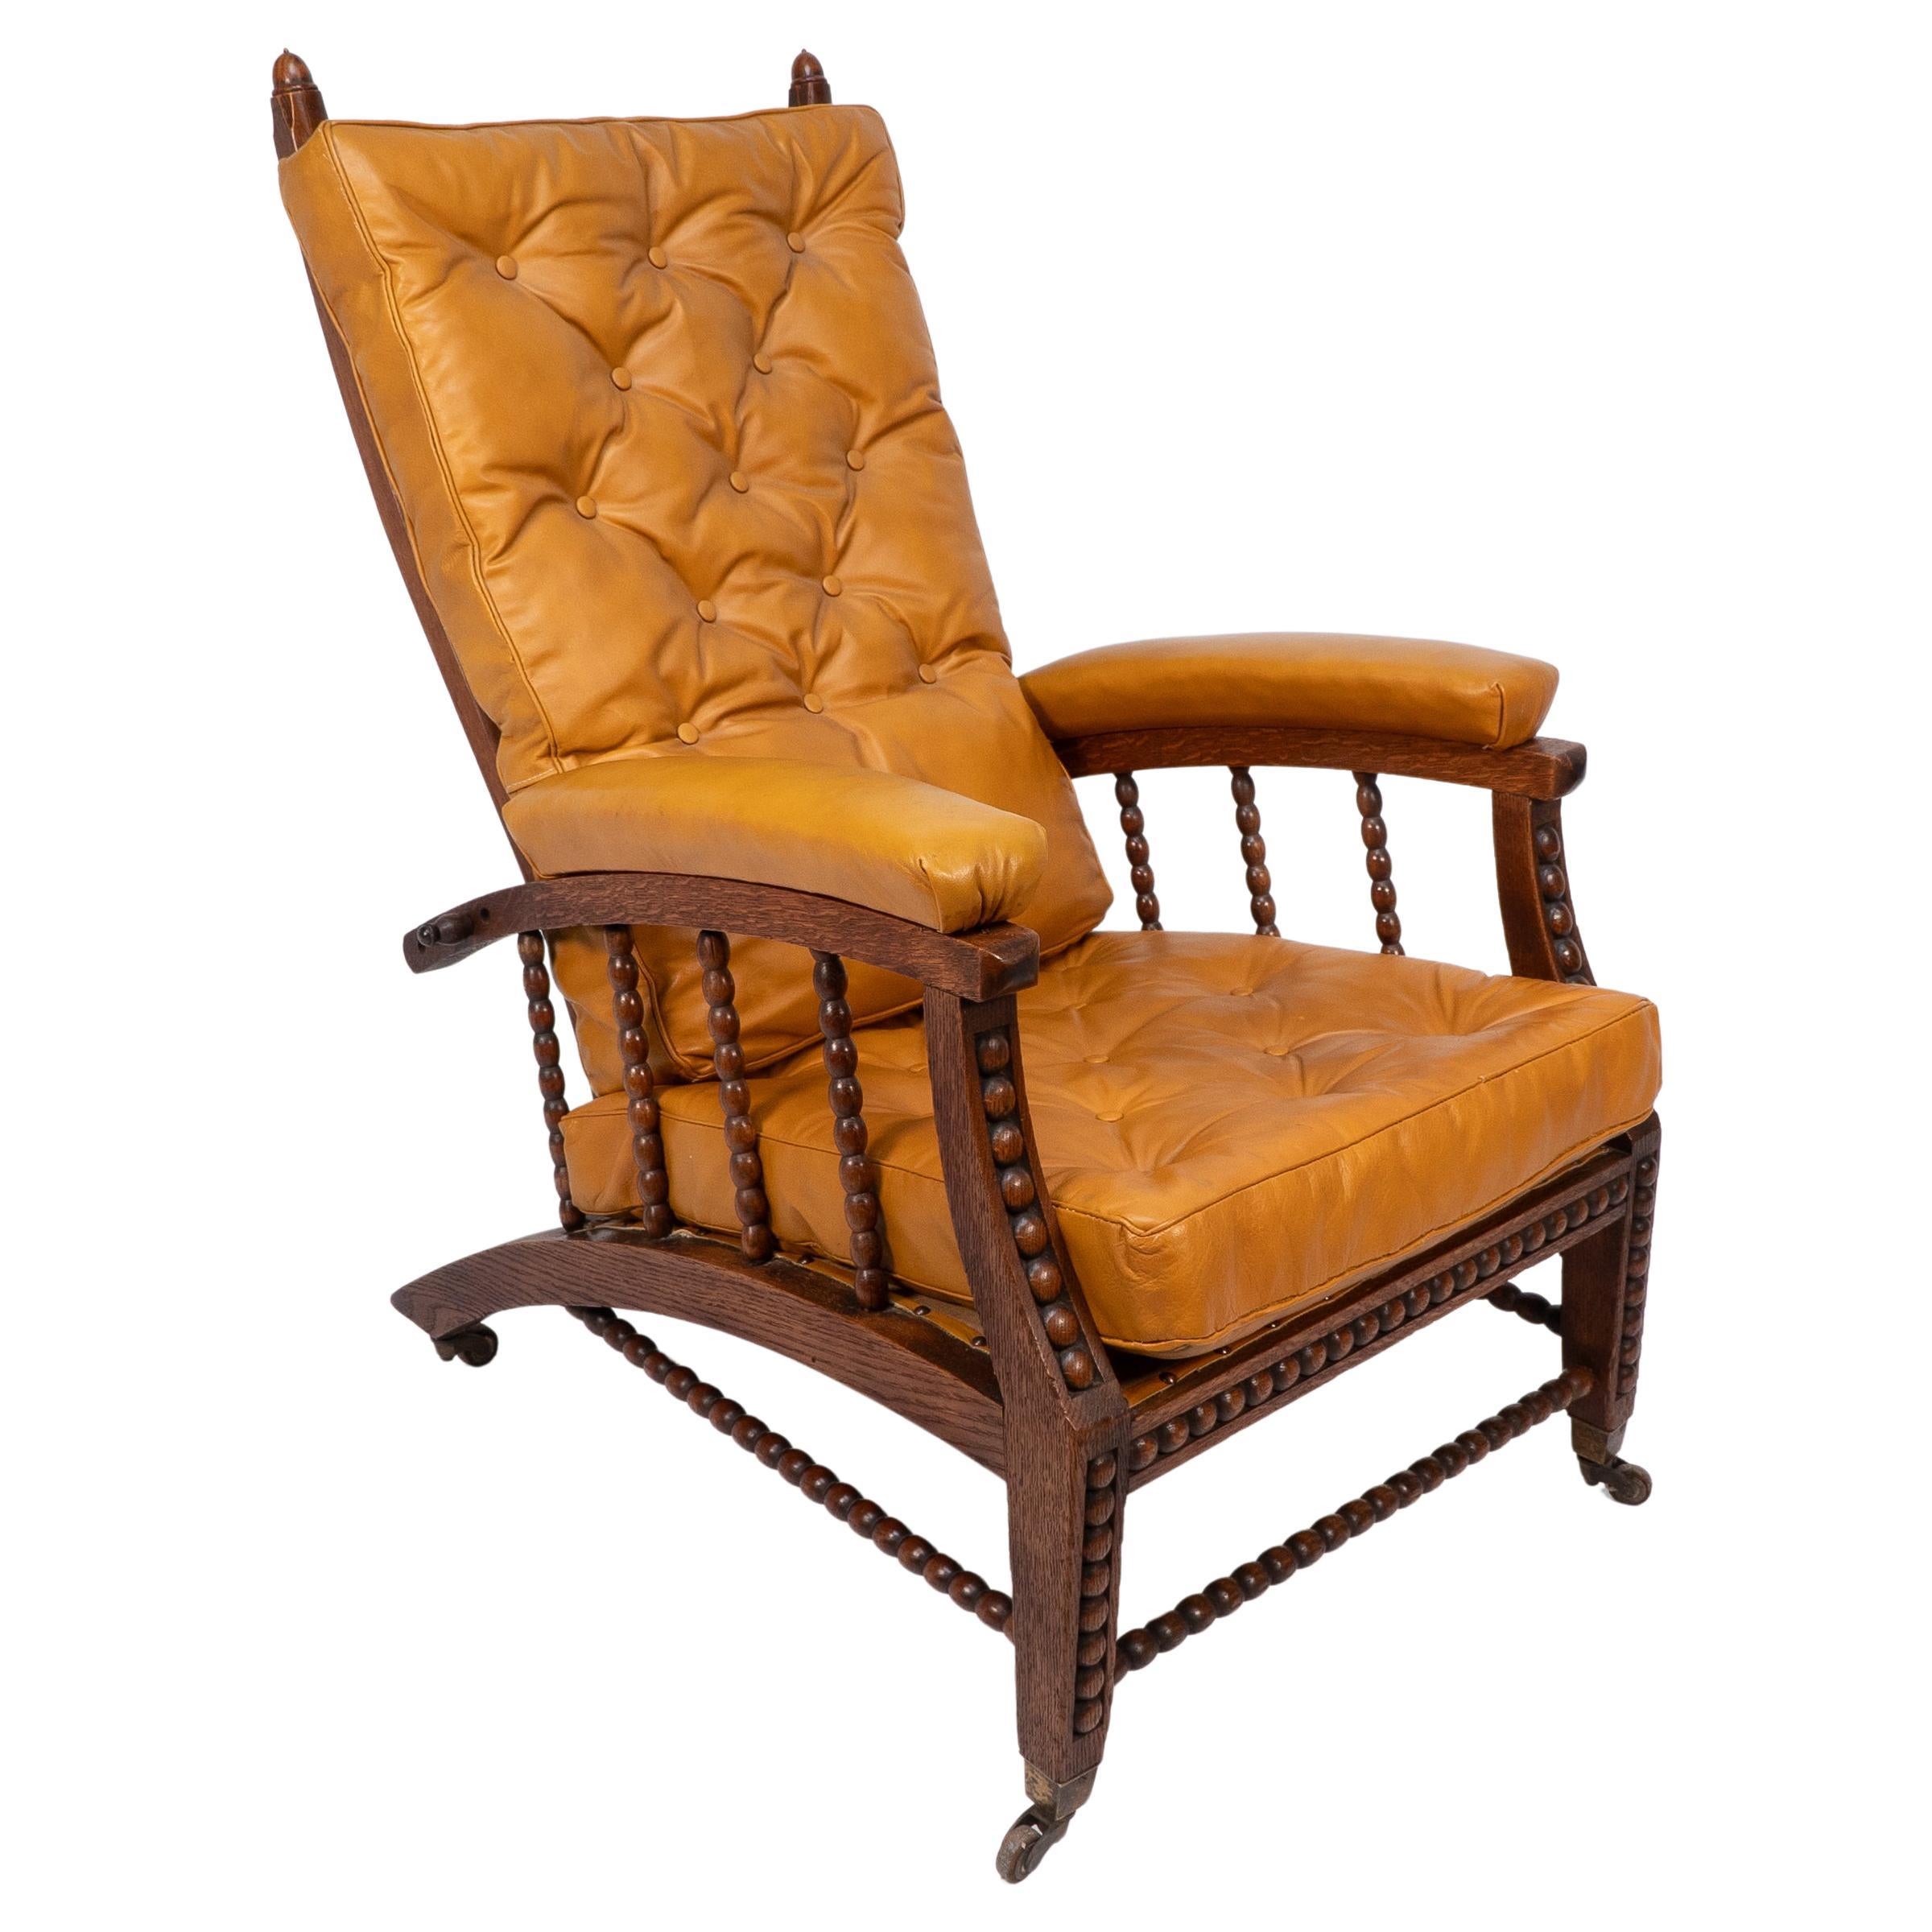 Phillip Webb for Morris & Co. English Aesthetic Movement oak reclining armchair